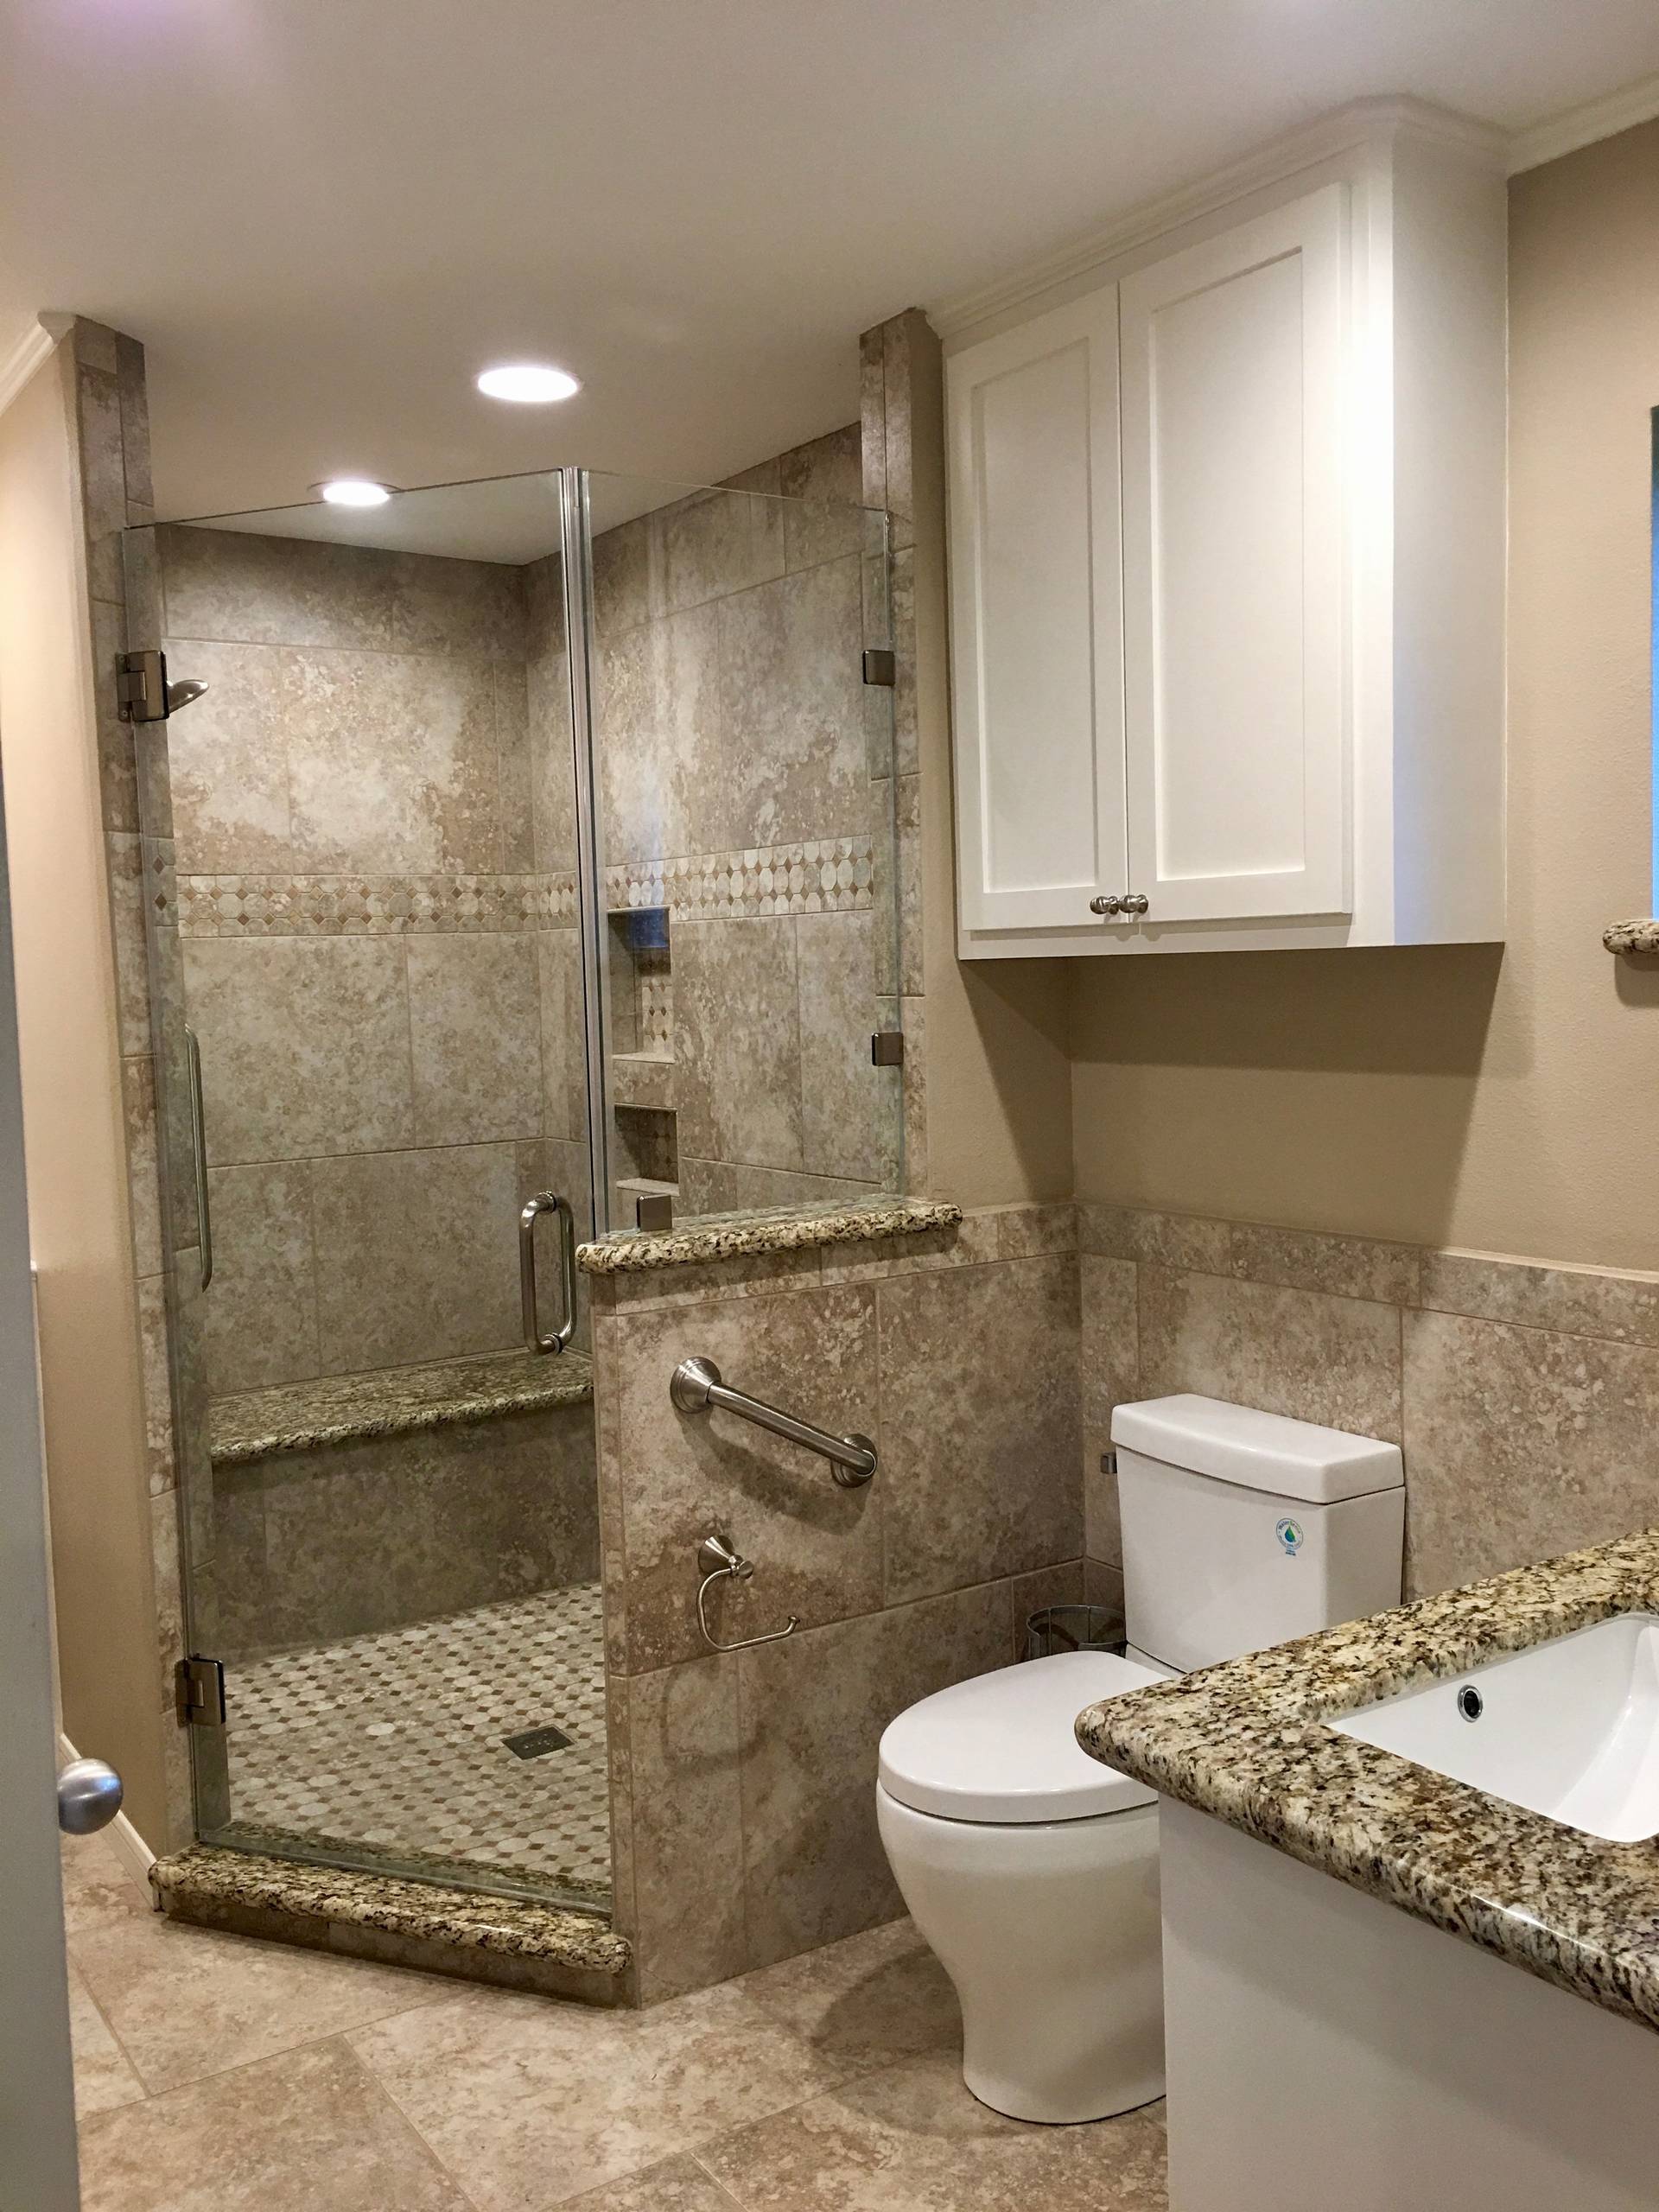 Brazoria Master Bathroom Remodel - 2017